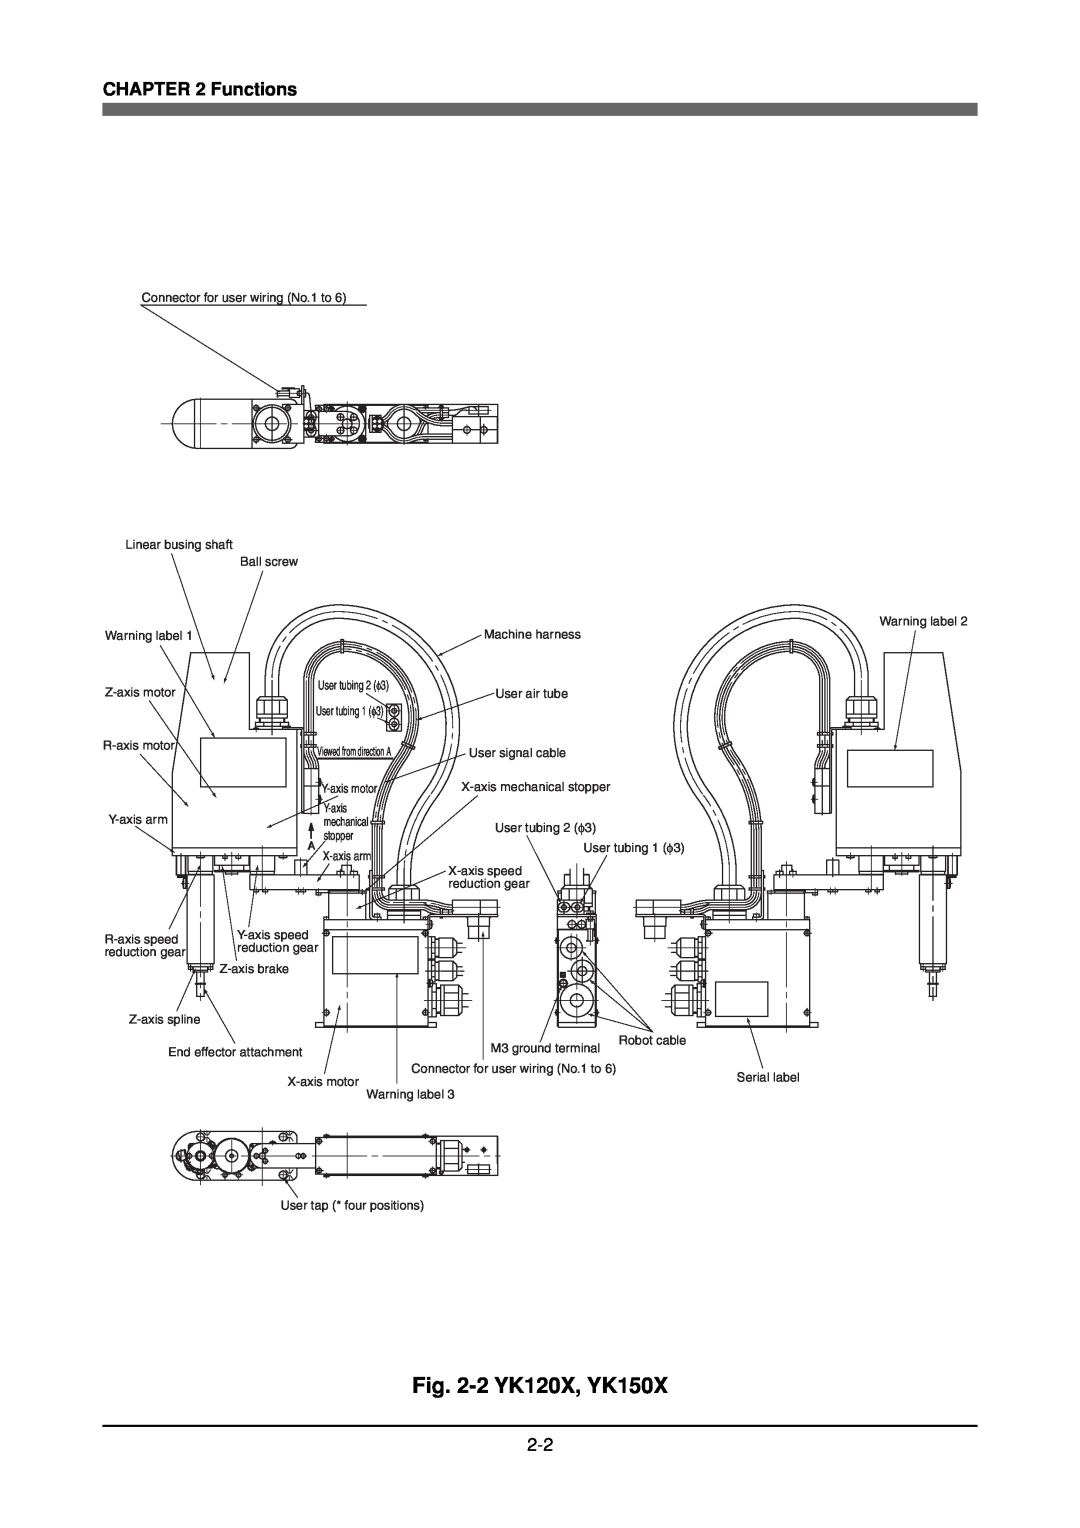 Yamaha YK180X 2 YK120X, YK150X, Functions, User tubing 2 φ3, User tubing 1 φ3, Connector for user wiring No.1 to 